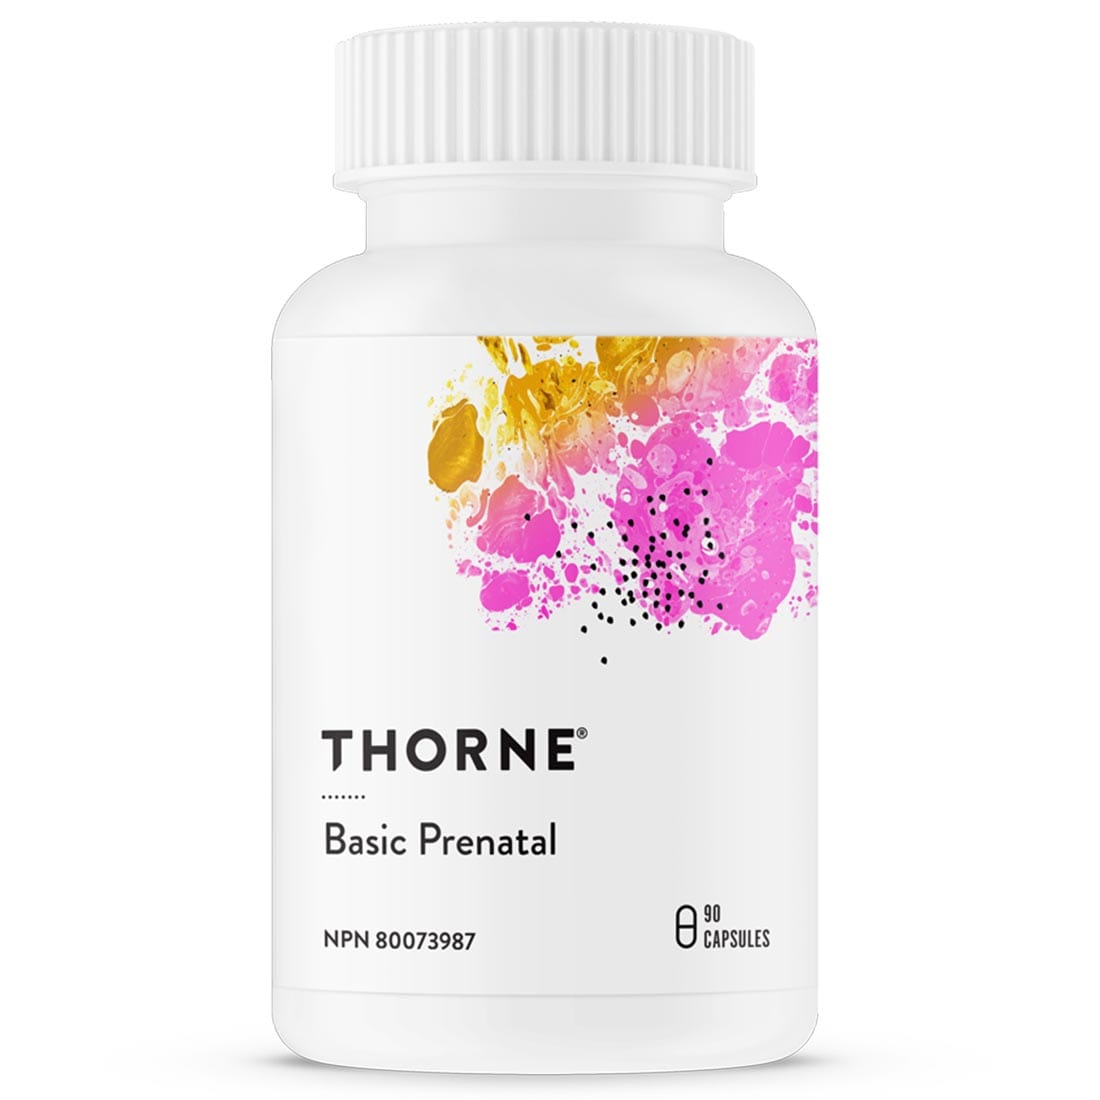 Thorne Basic Prenatal, 90 Capsules